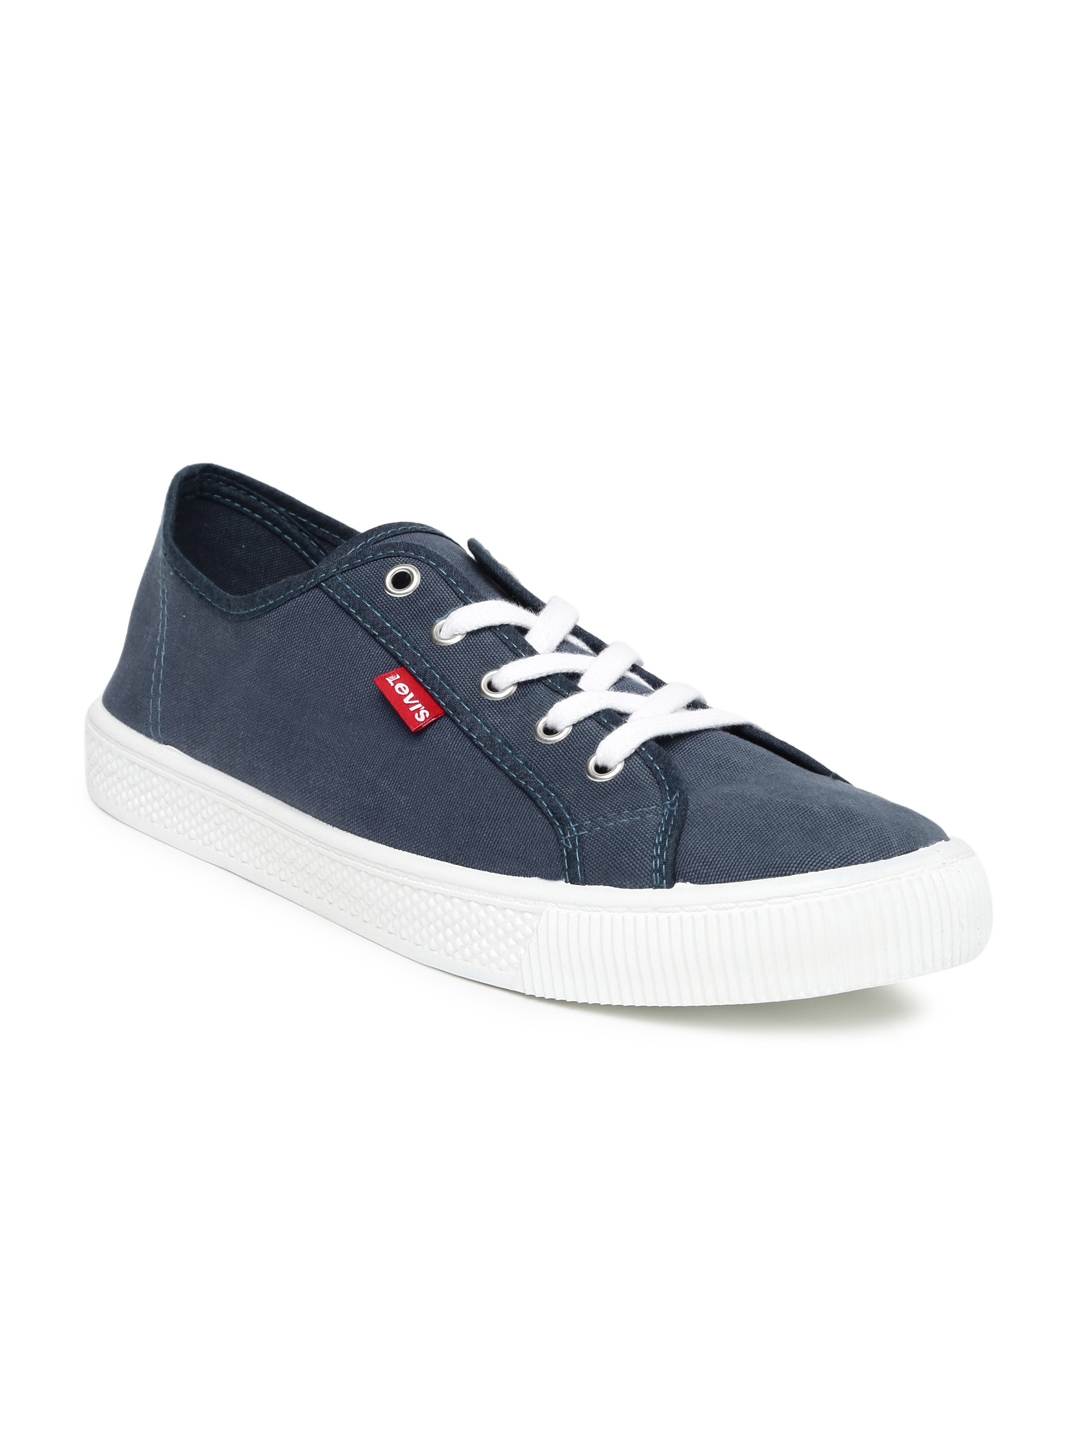 Buy Levis Men Navy Blue Sneakers - Casual Shoes for Men 1813453 | Myntra